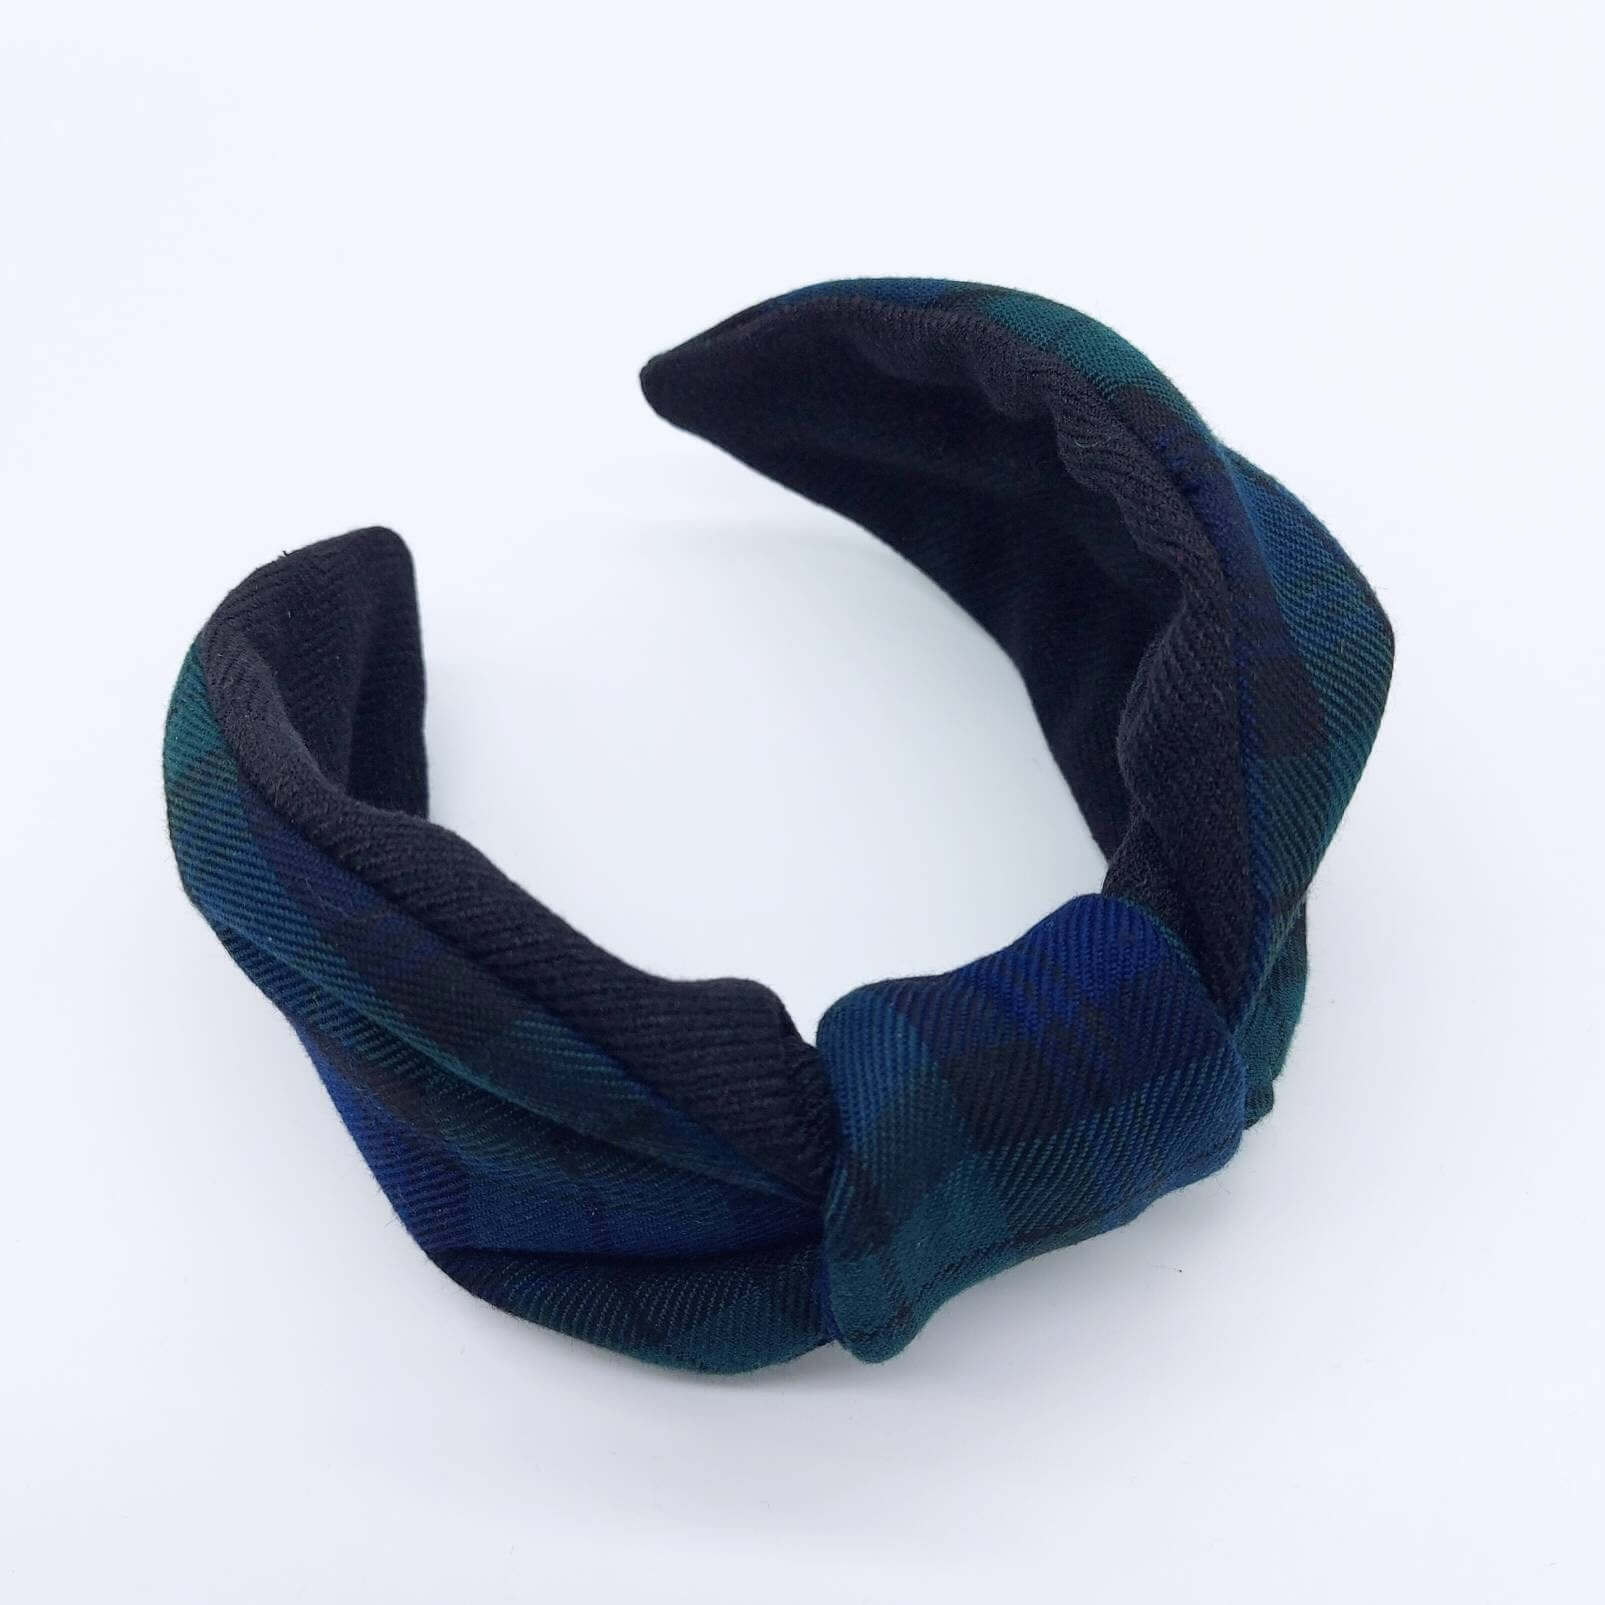 A bow-style, black and navy blue tartan plaid fabric headband with plain black lining underneath.